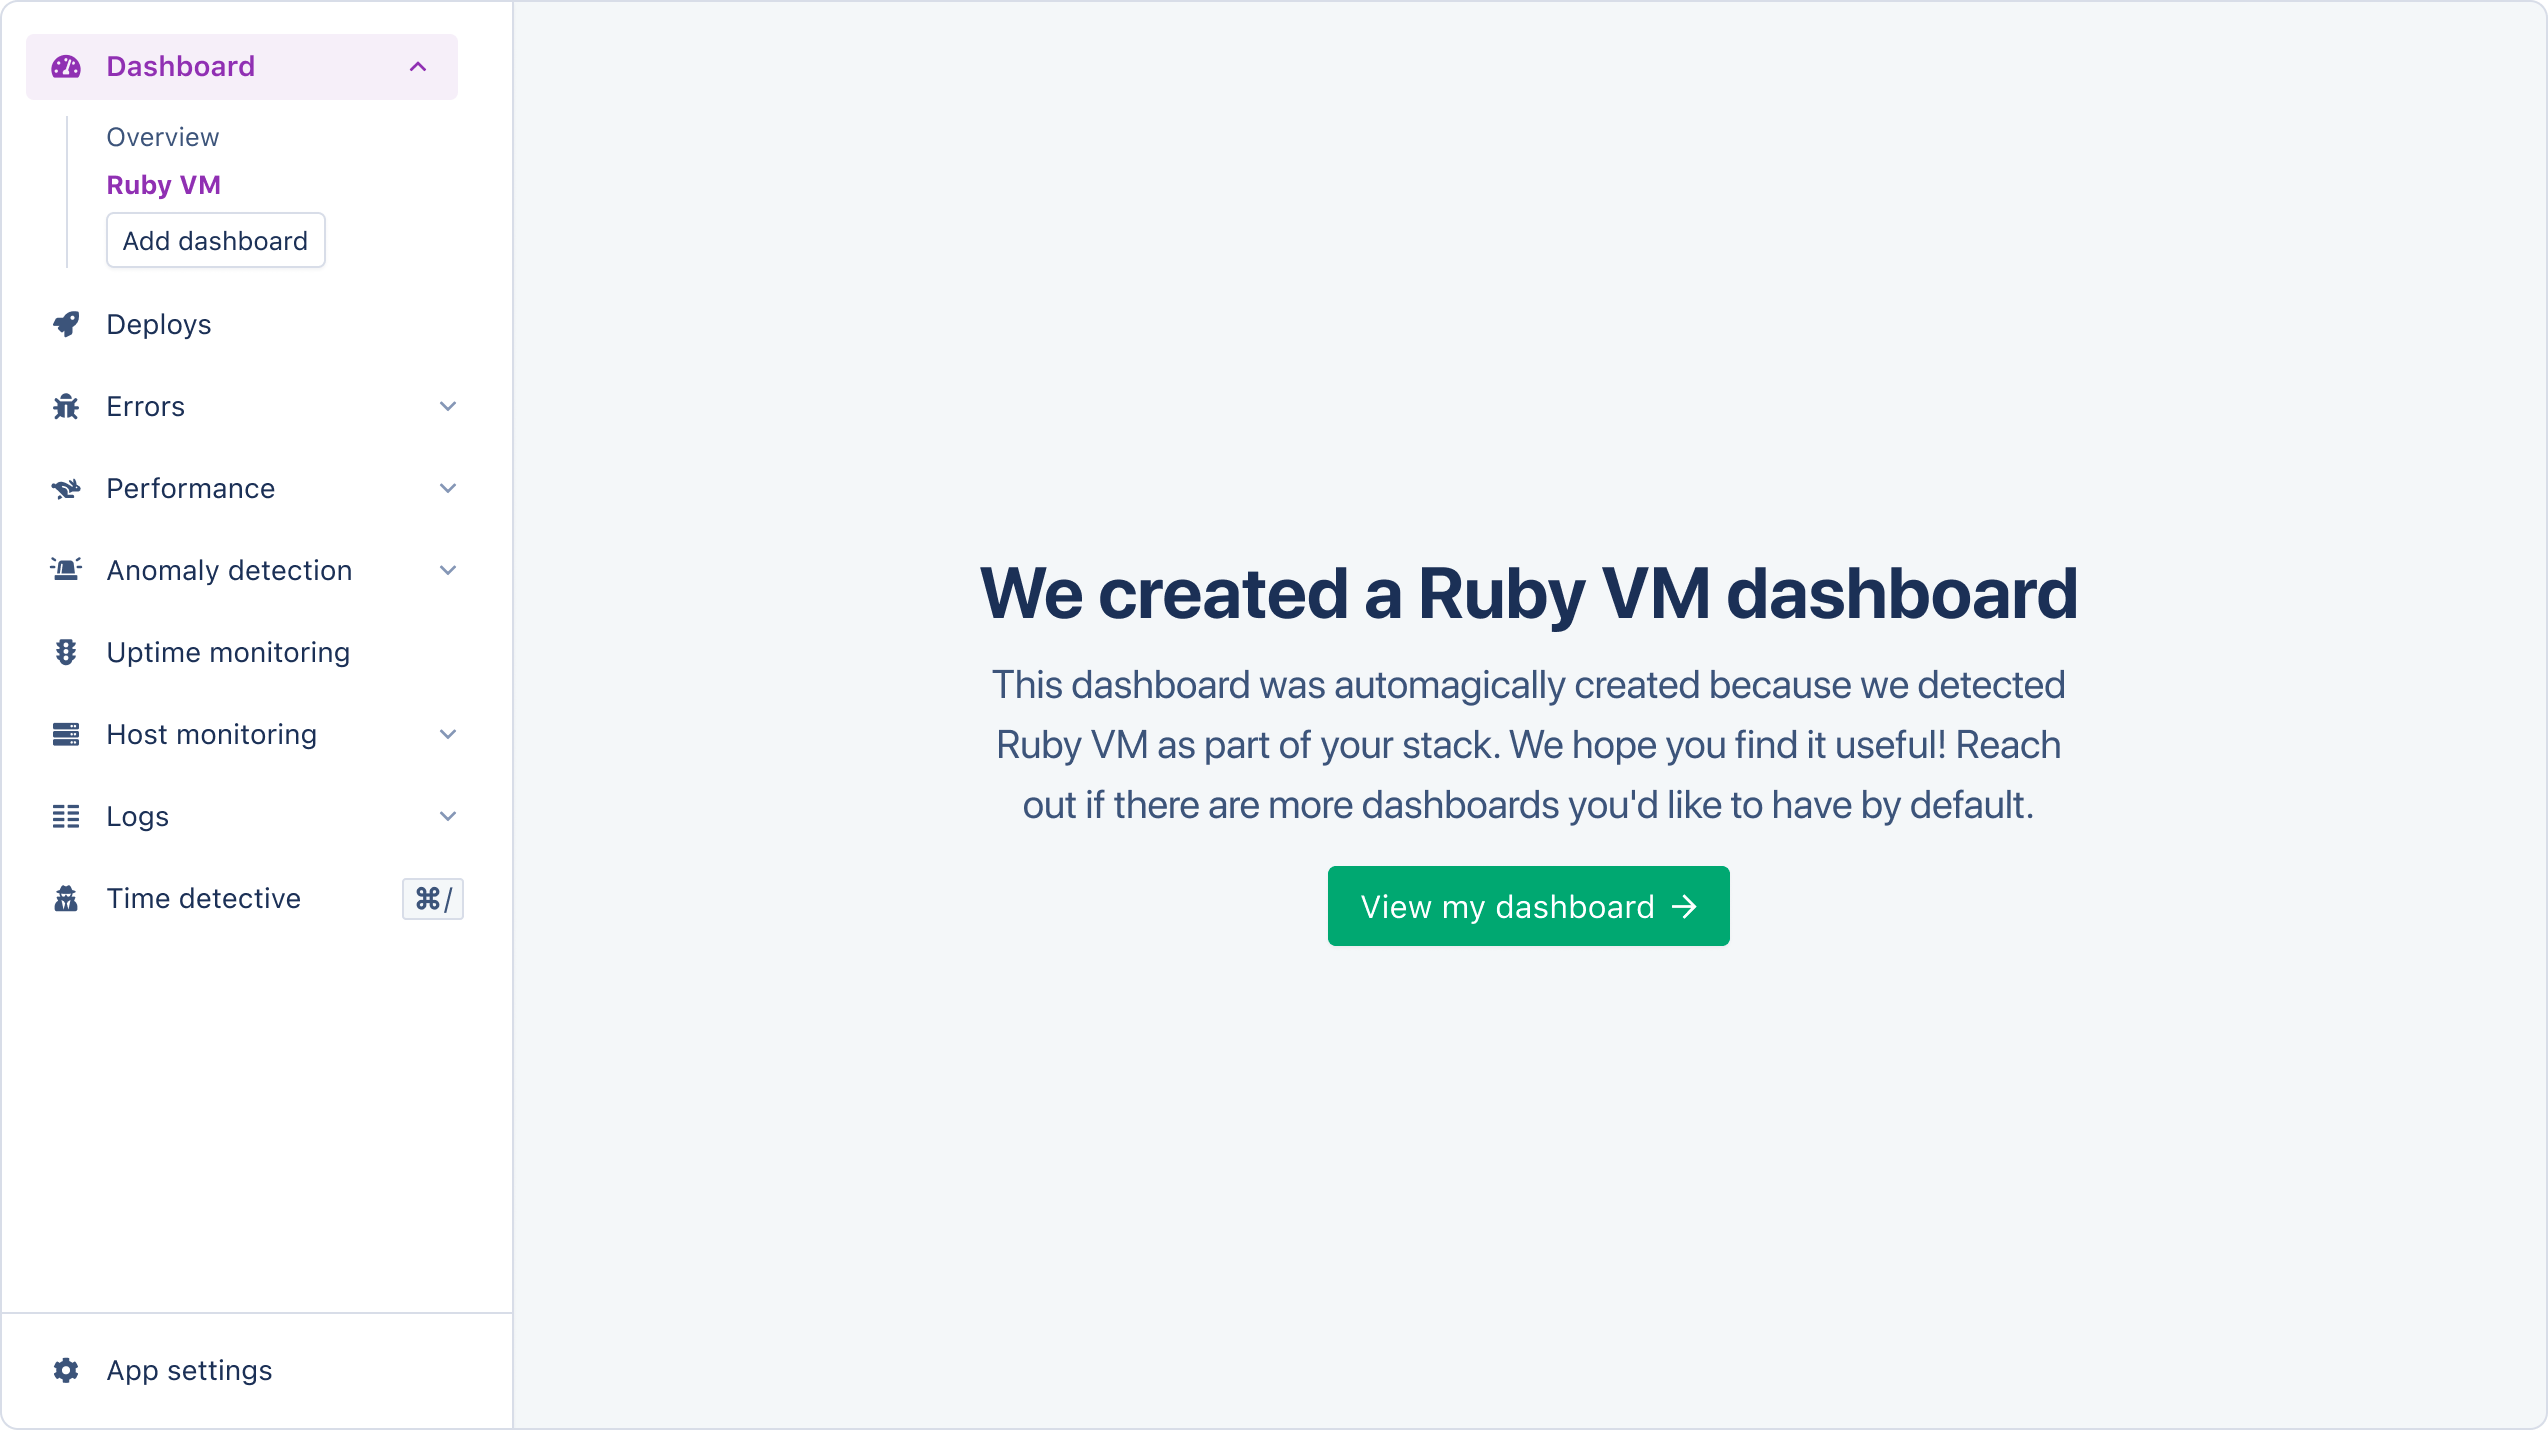 Ruby VM Magic Dashoard creation